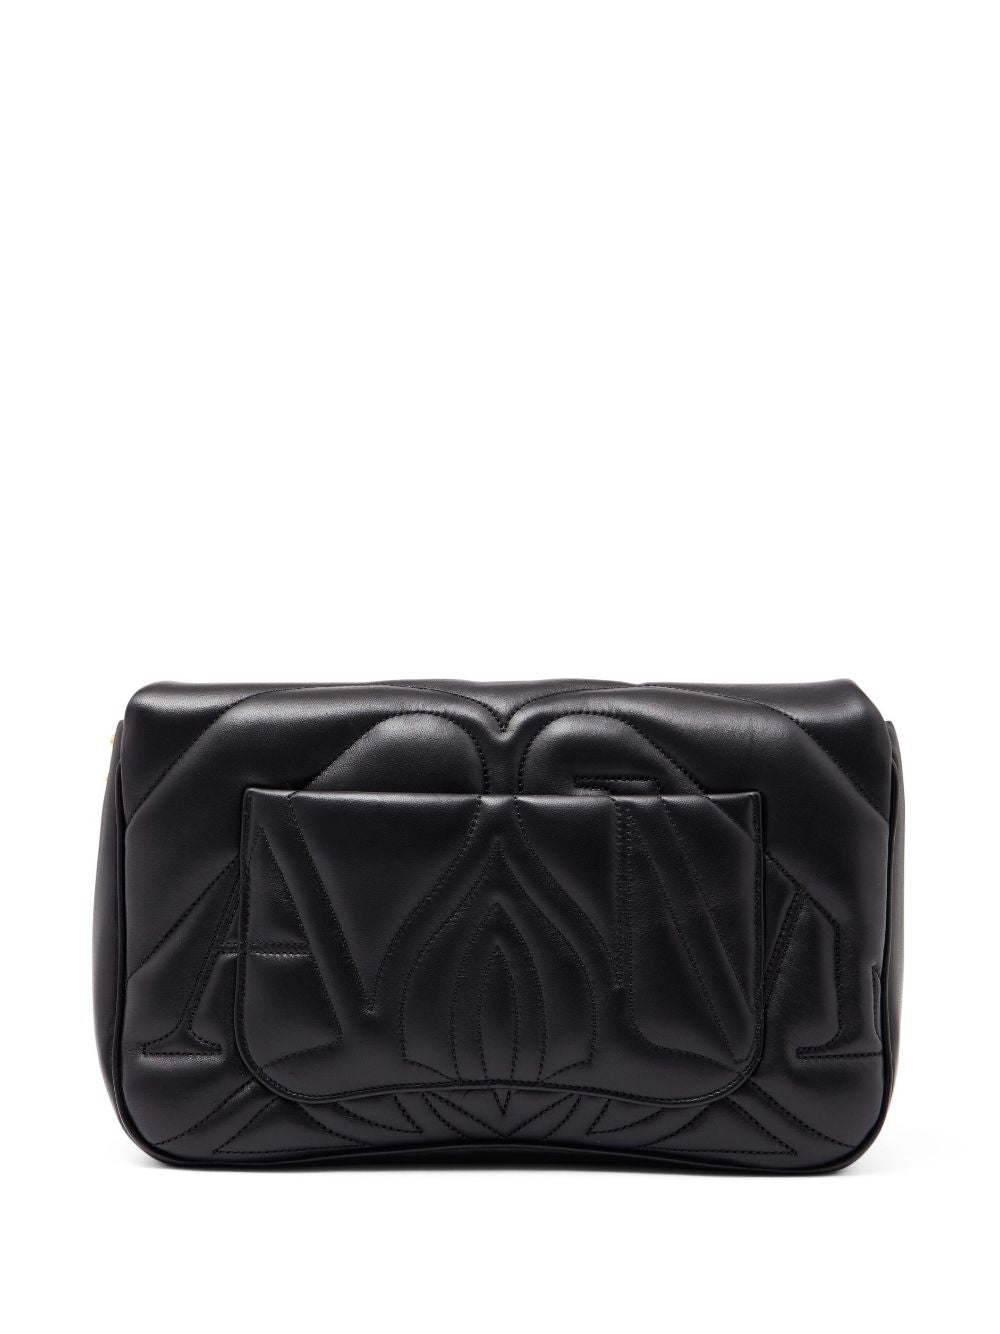 ALEXANDER MCQUEEN Black Quilted Leather Shoulder Handbag for Women - FW23